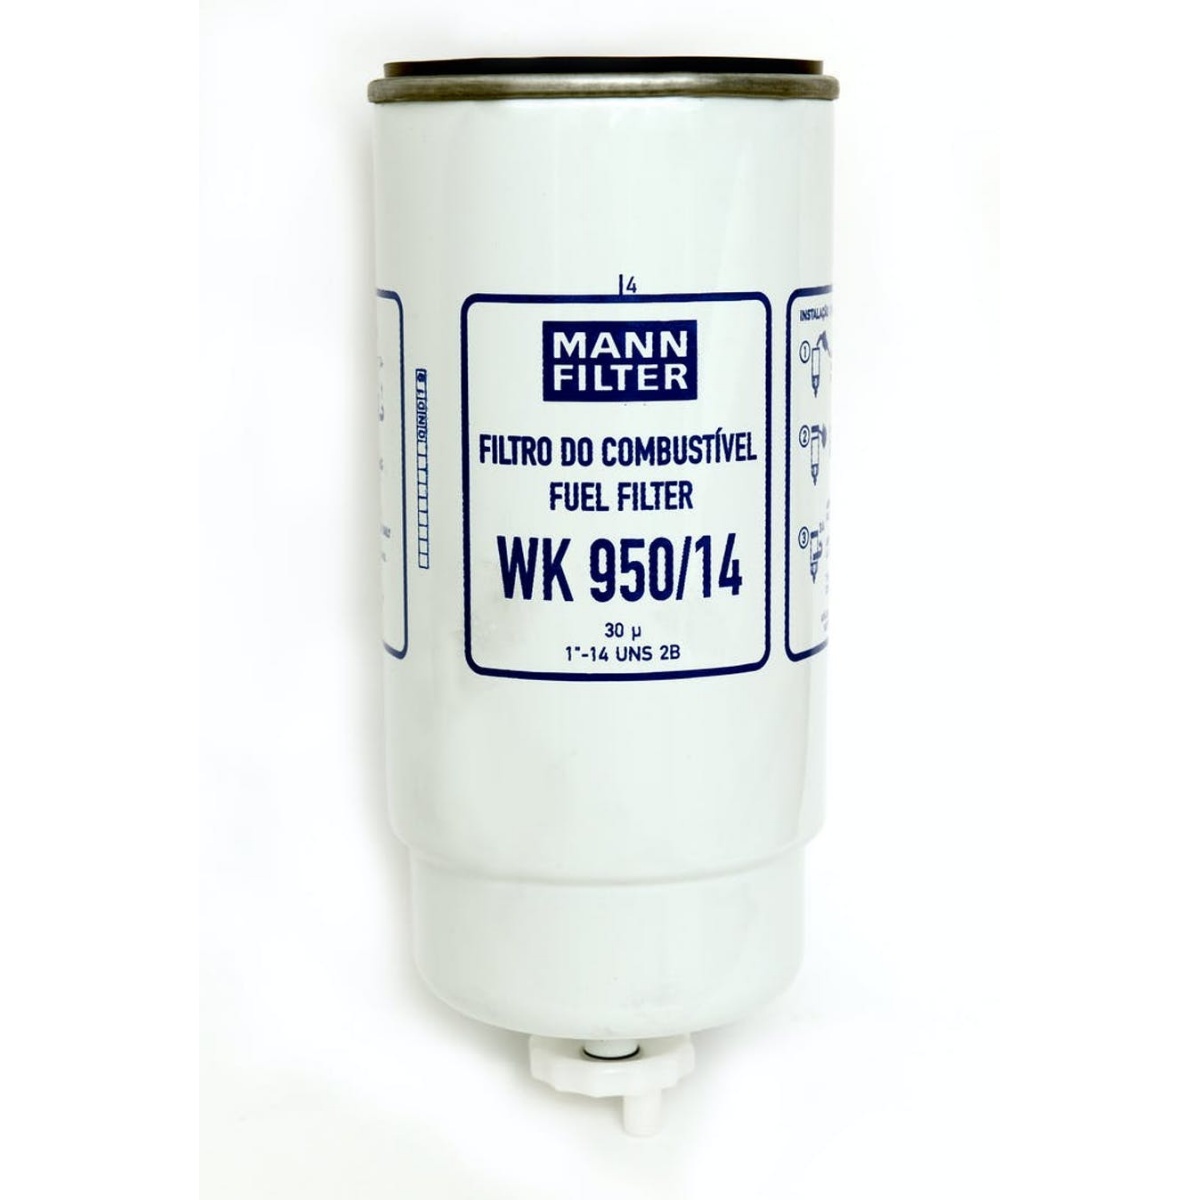 Filtro Combustivel Vw 15-180 A Partir De 2000 Motor Mwm 6,10 Tca Mann Filtros Wk950/14